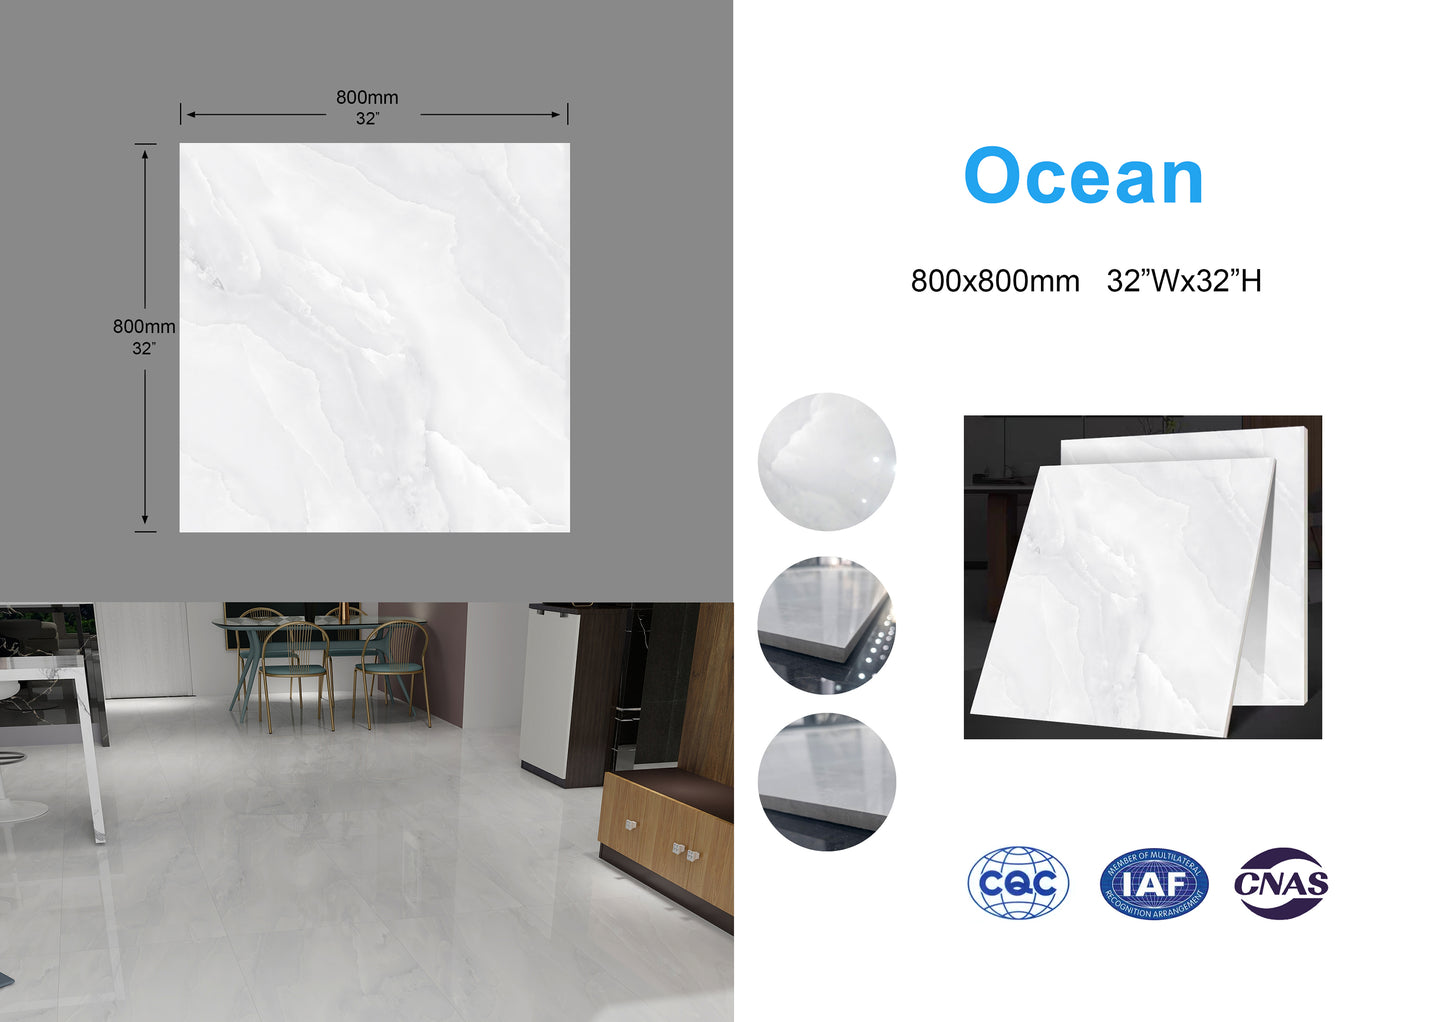 Ocean family Full Polished Glazed Tile light gray 32"x32" 3pcs/box 21.33sf/box $1.59/sf (15 days return/exchange) Bulk Deal 2000sf+ $1.39/SF(No return/no exchange)